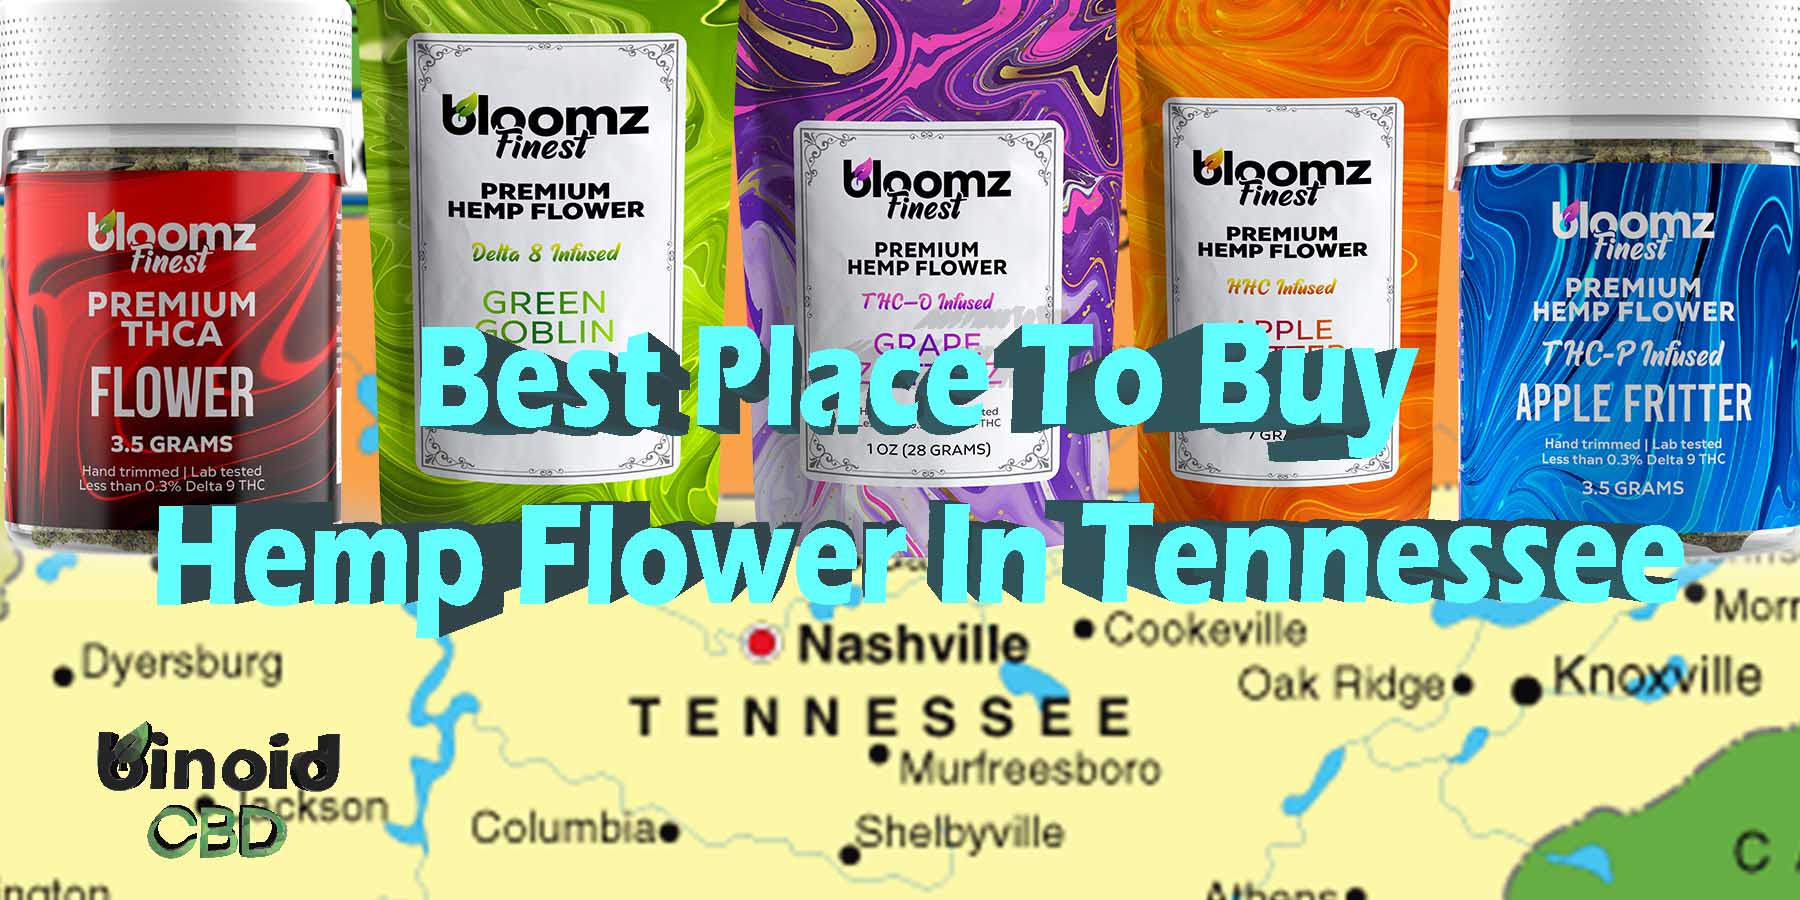 Buy Hemp Flower Tennessee Joints PreRolls Get Online Near Me For Sale Best Brand Strongest Real Legal Store Shop Reddit